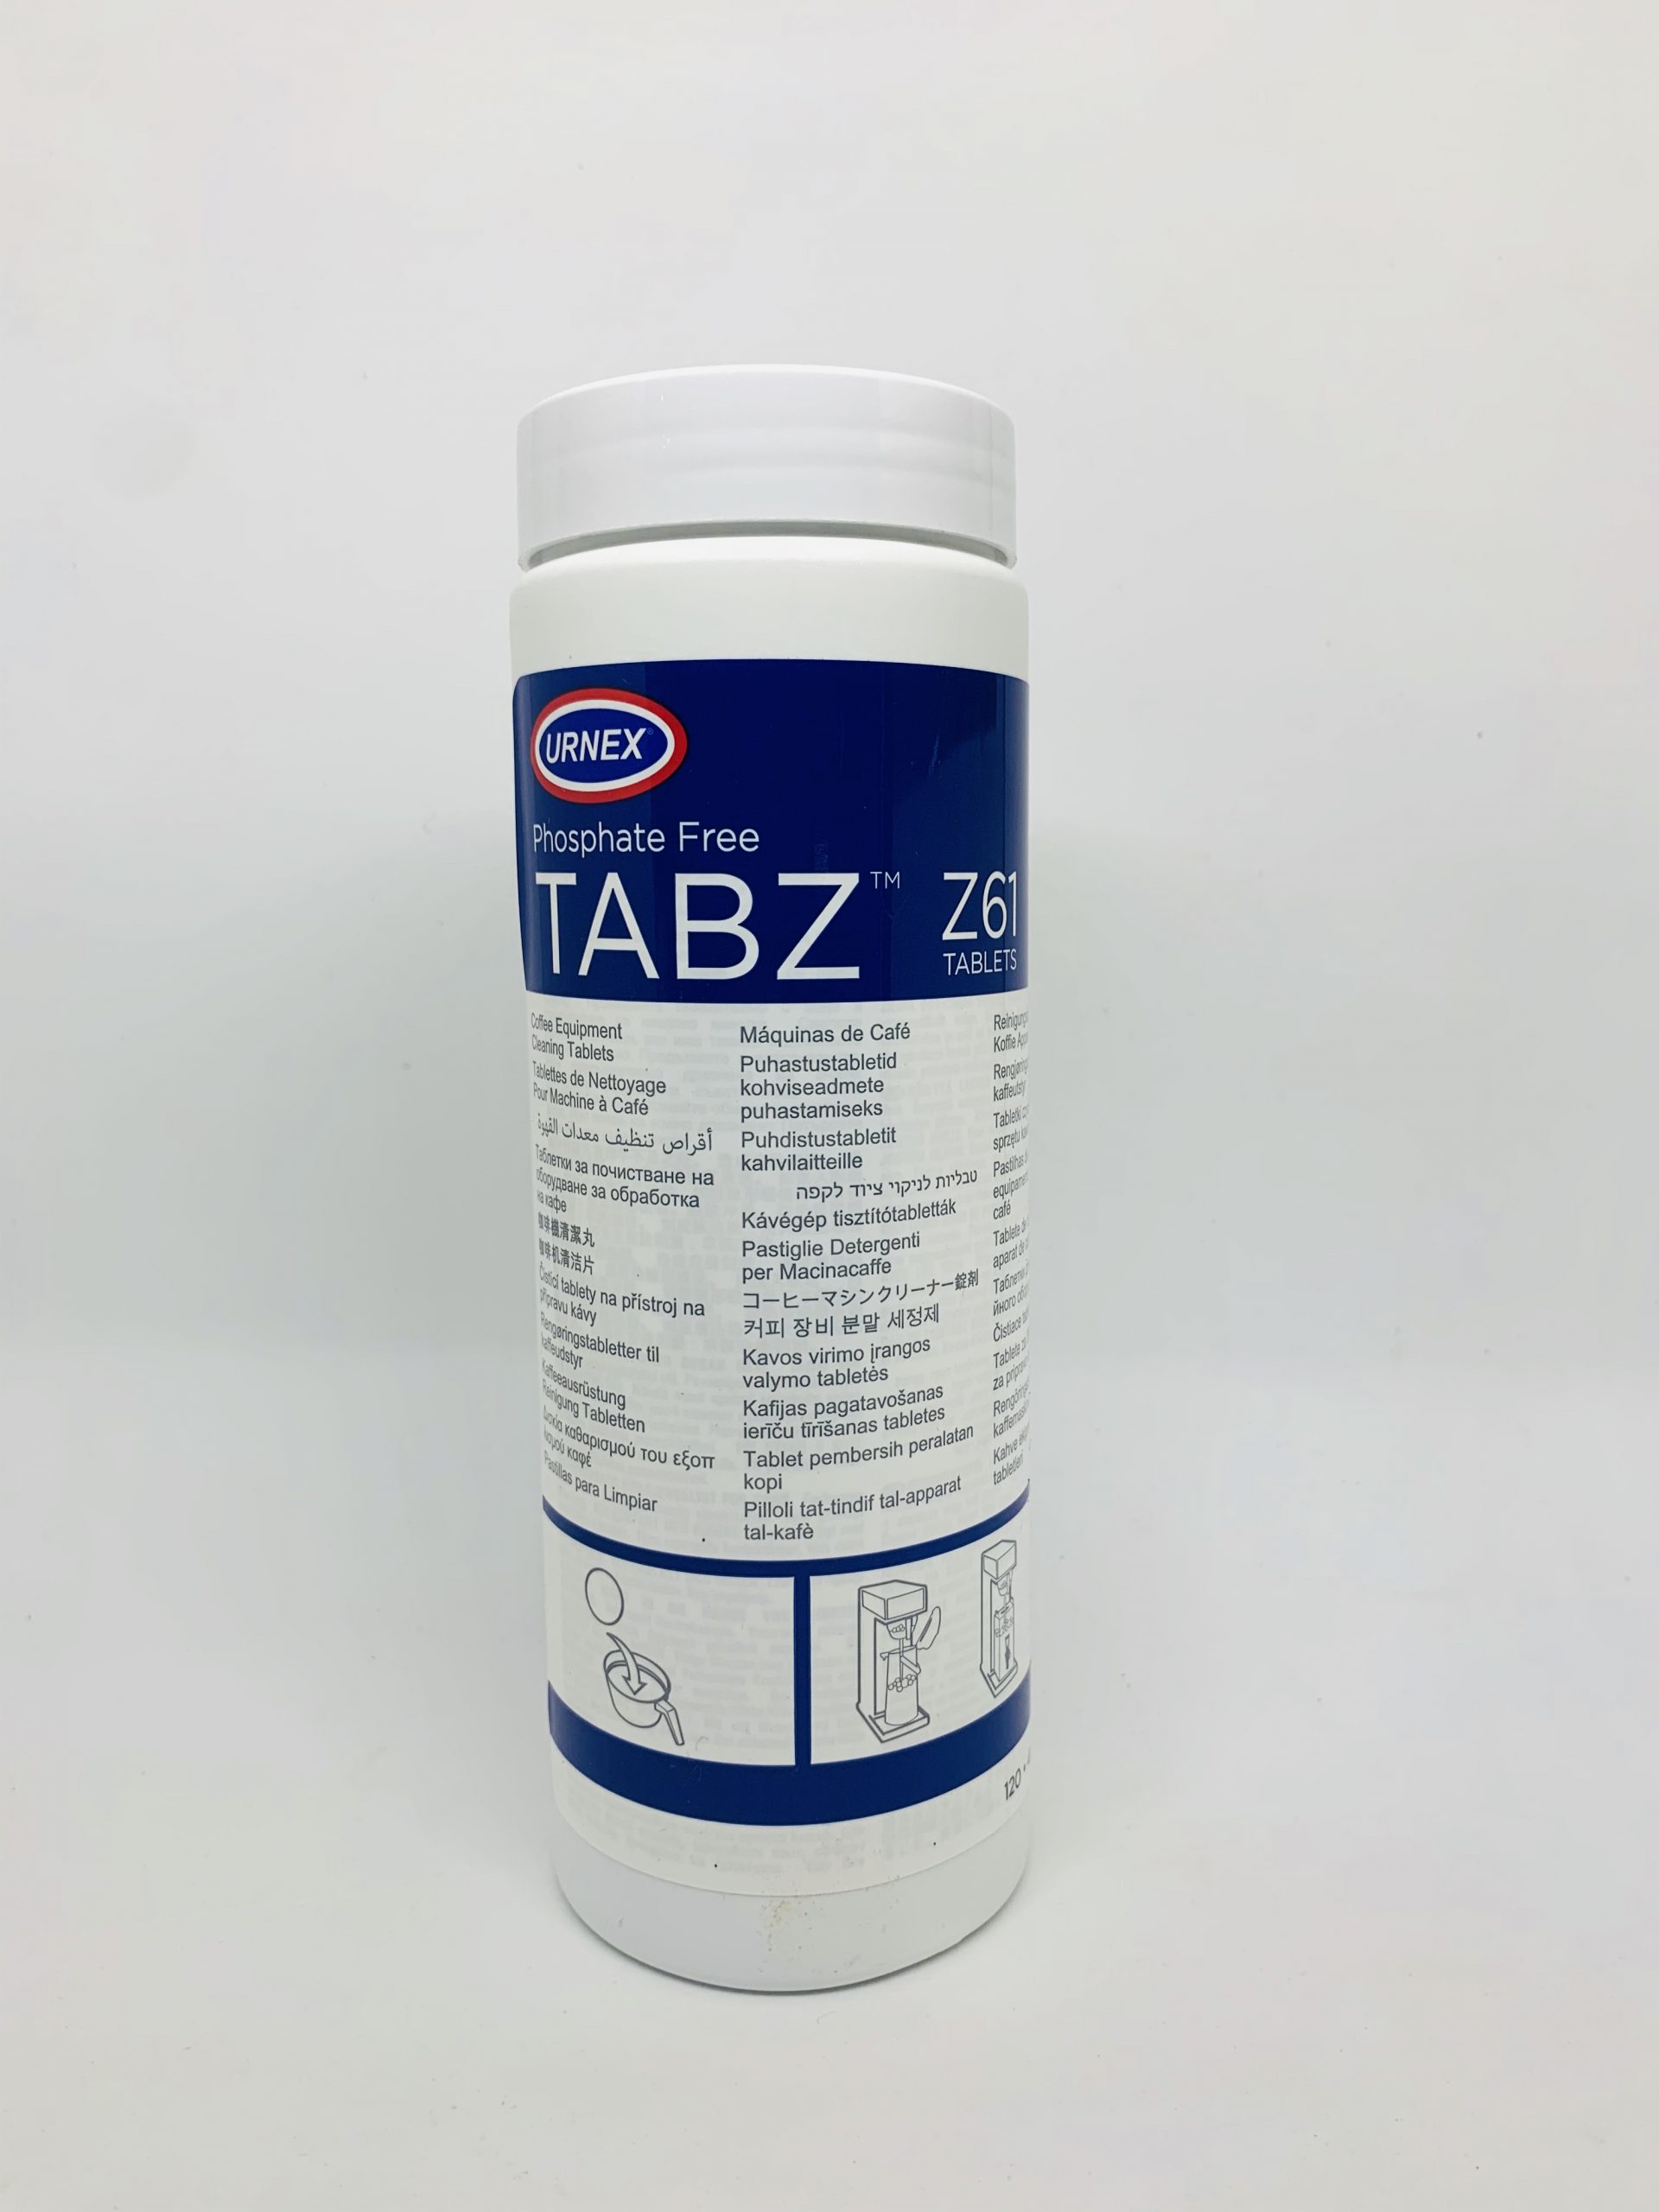 Urnex Tabz (Z61) tablets